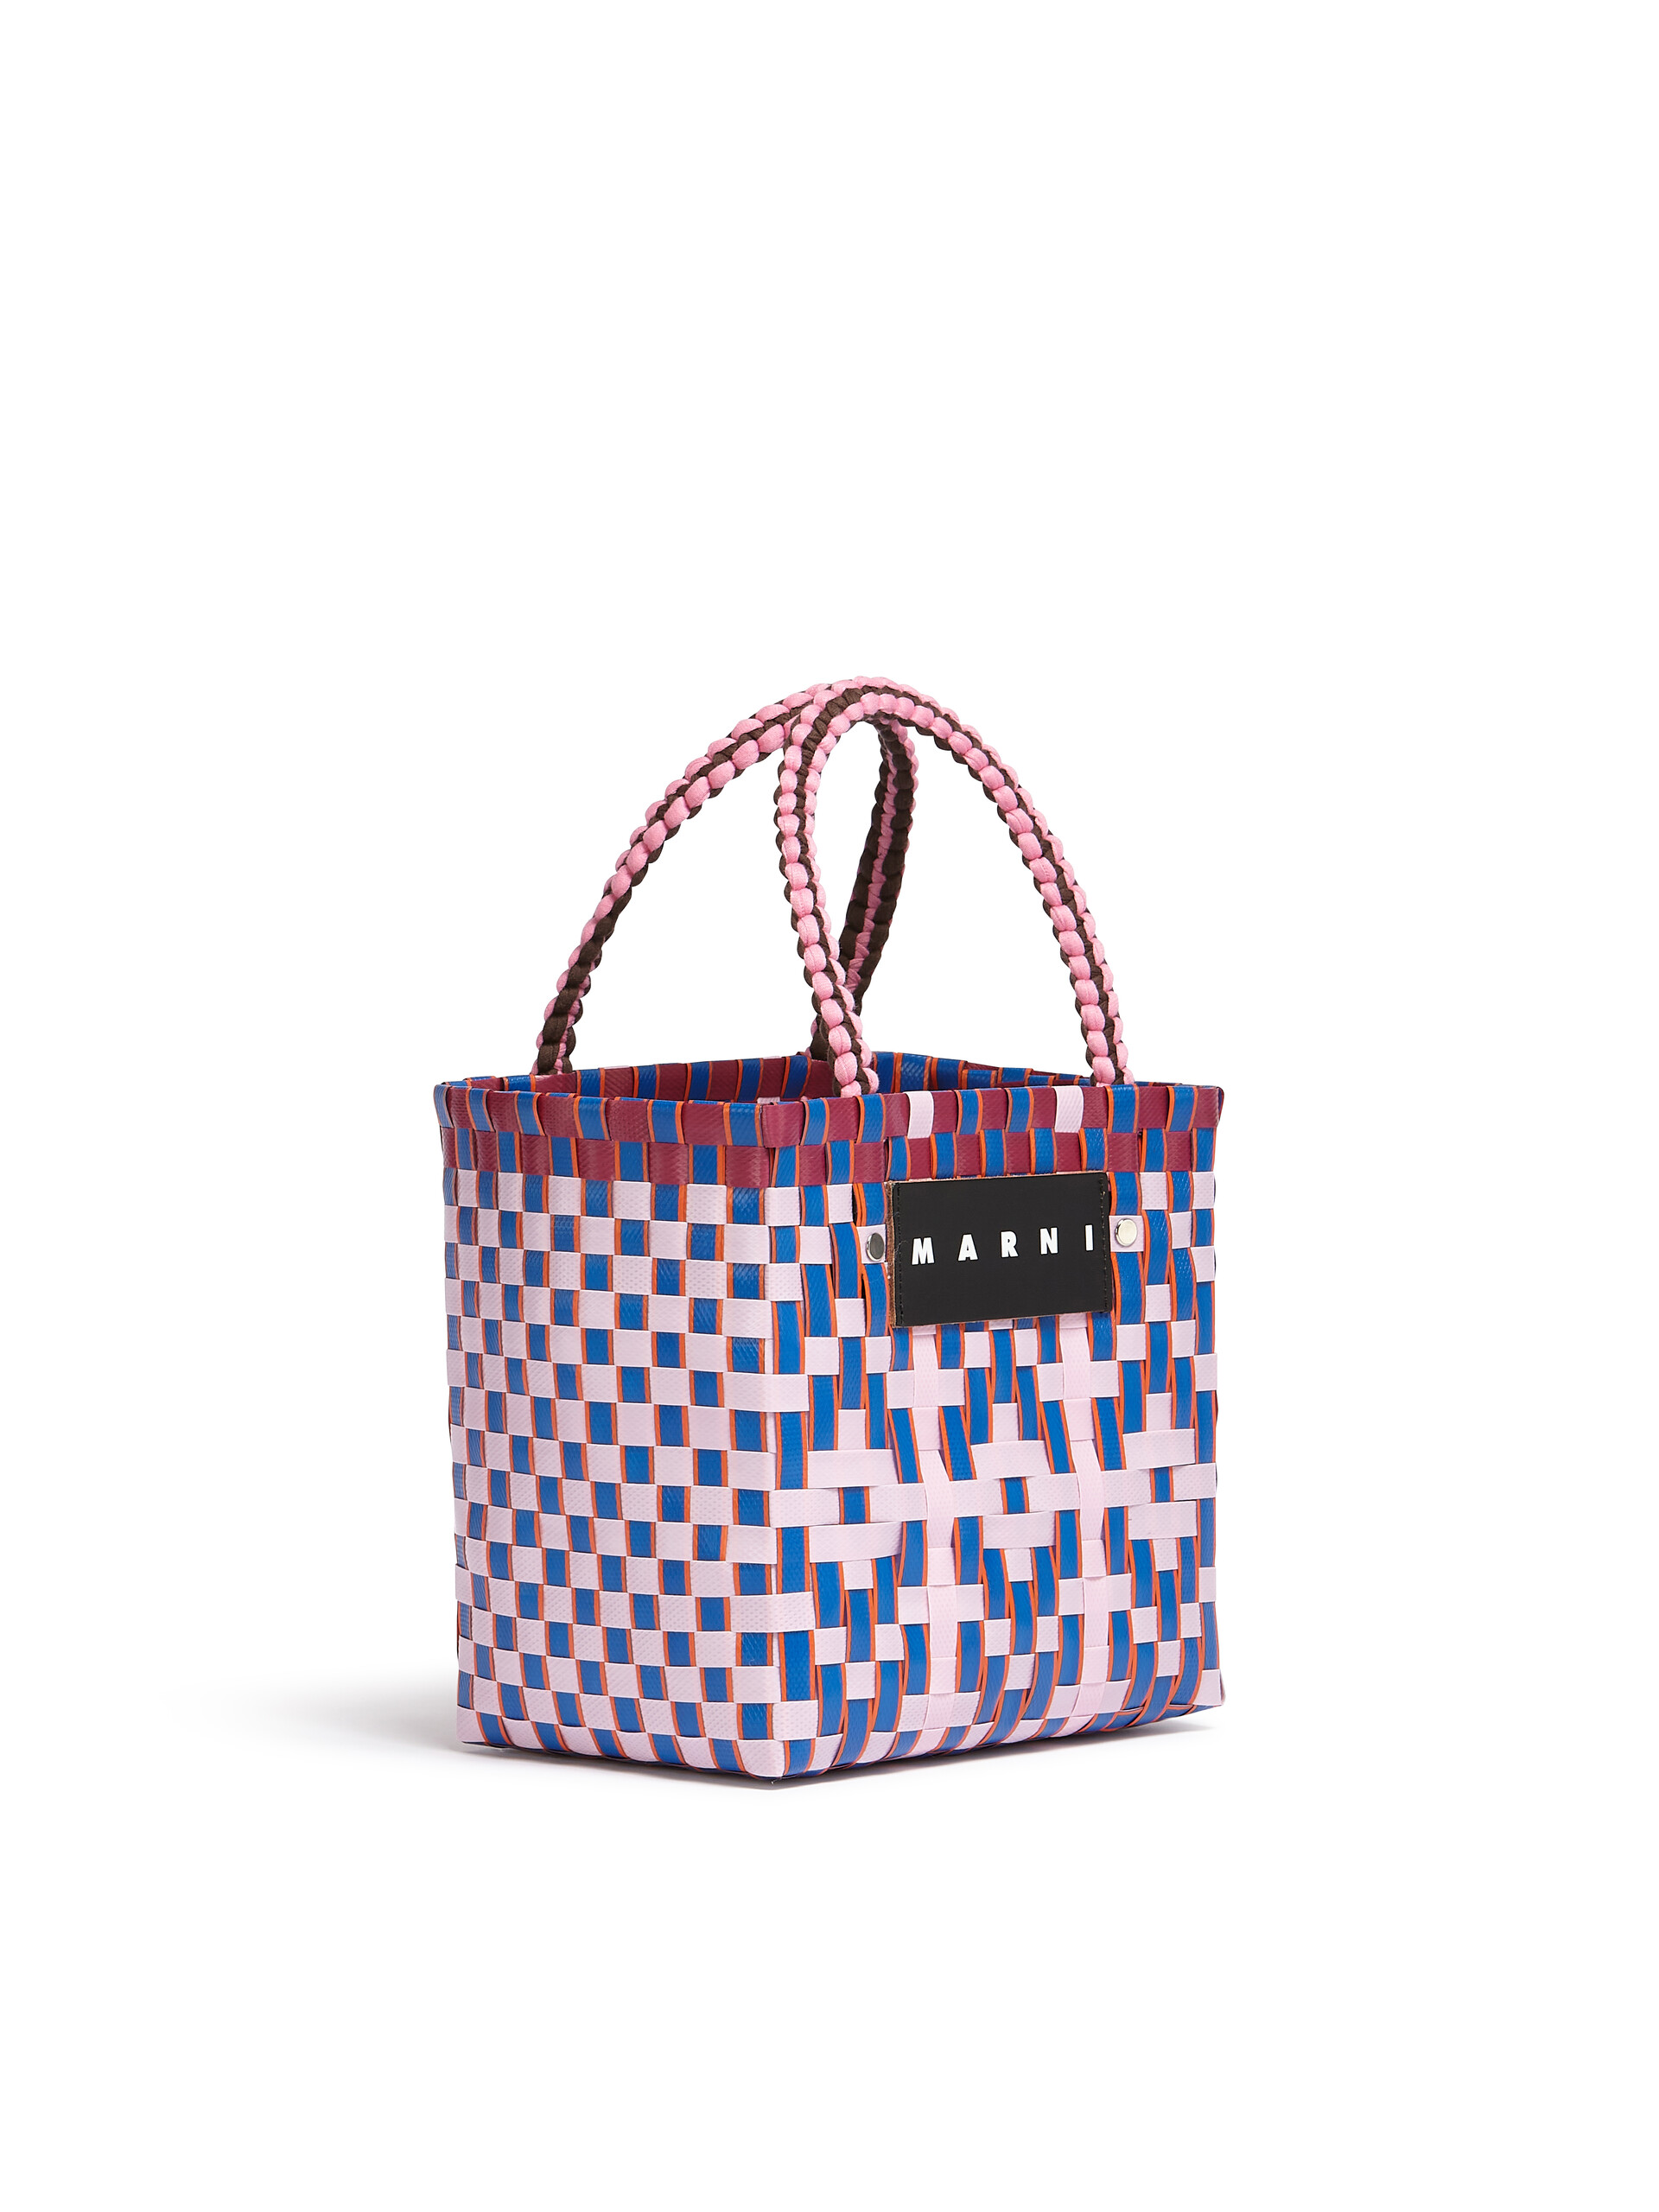 MARNI MARKET BASKET bag in pink diamond woven material - Bags - Image 2